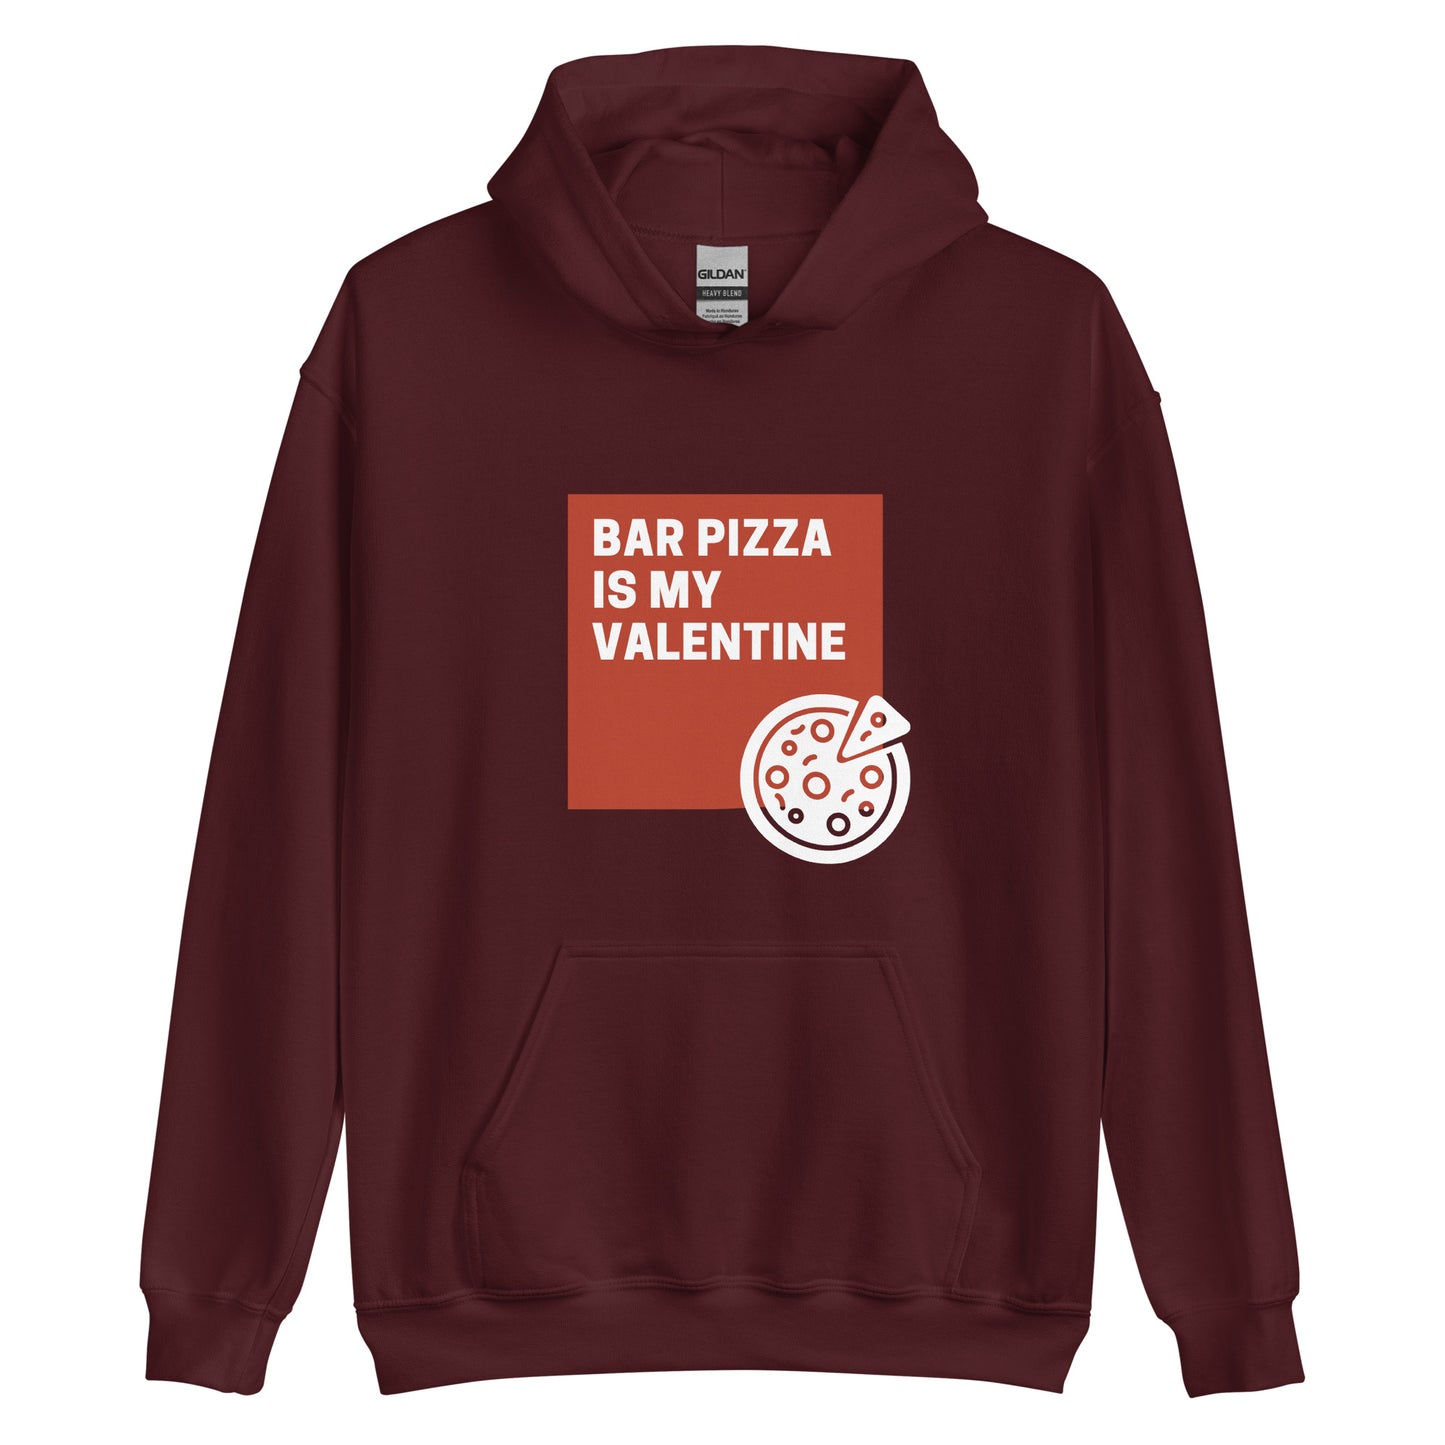 Bar pizza is my valentine Hoodie